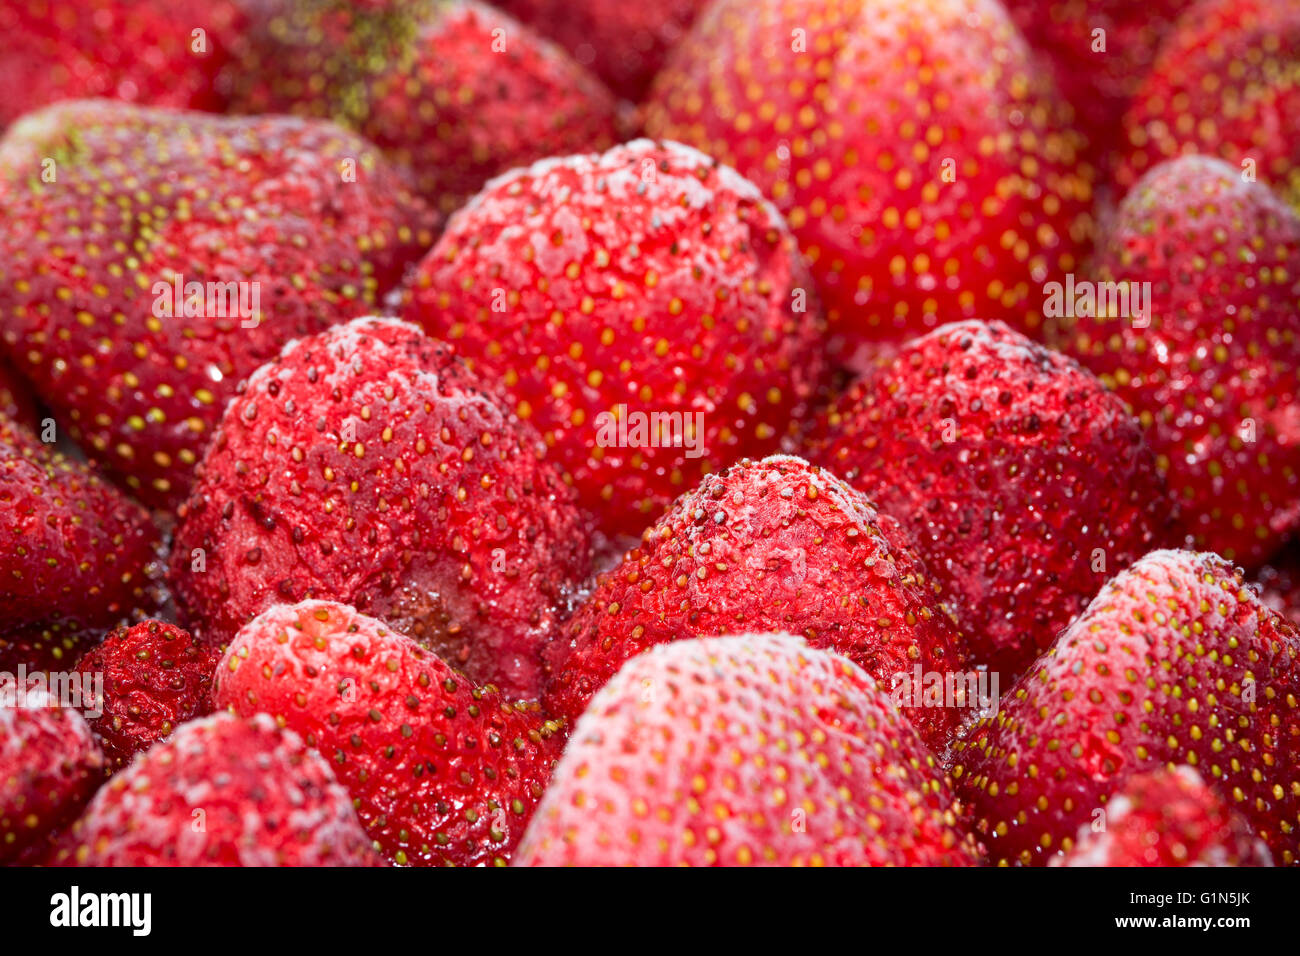 gefrorene Erdbeeren Hintergrund mit selektiven Fokus Stockfoto